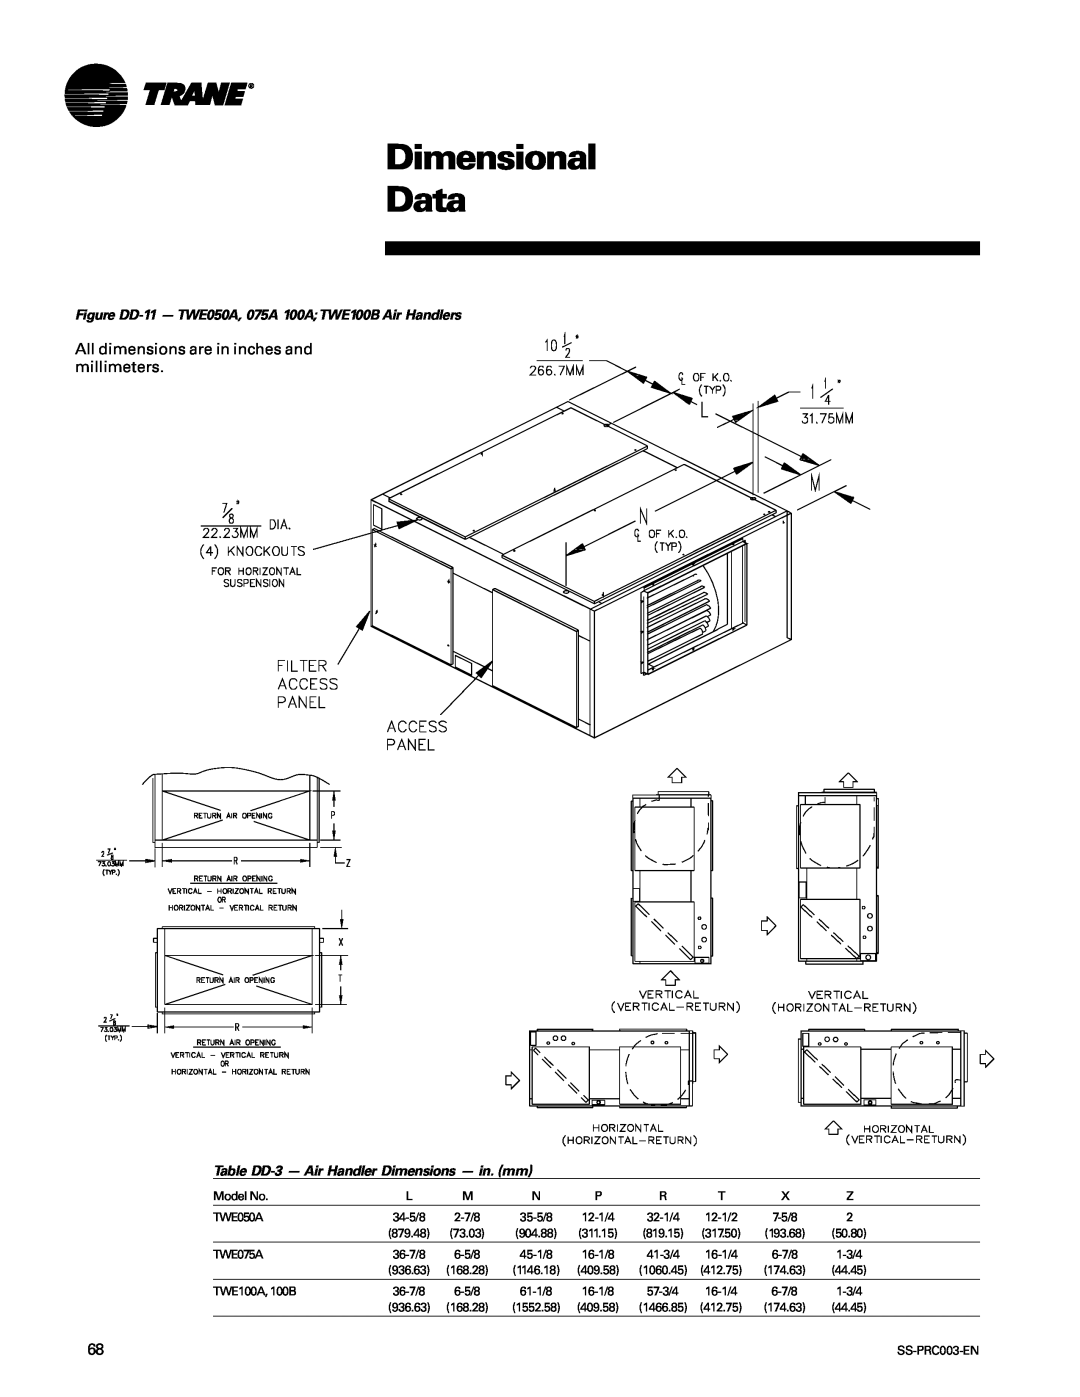 Trane SS-PRC003-EN manual Dimensional Data, Table DD-3- Air Handler Dimensions - in. mm 